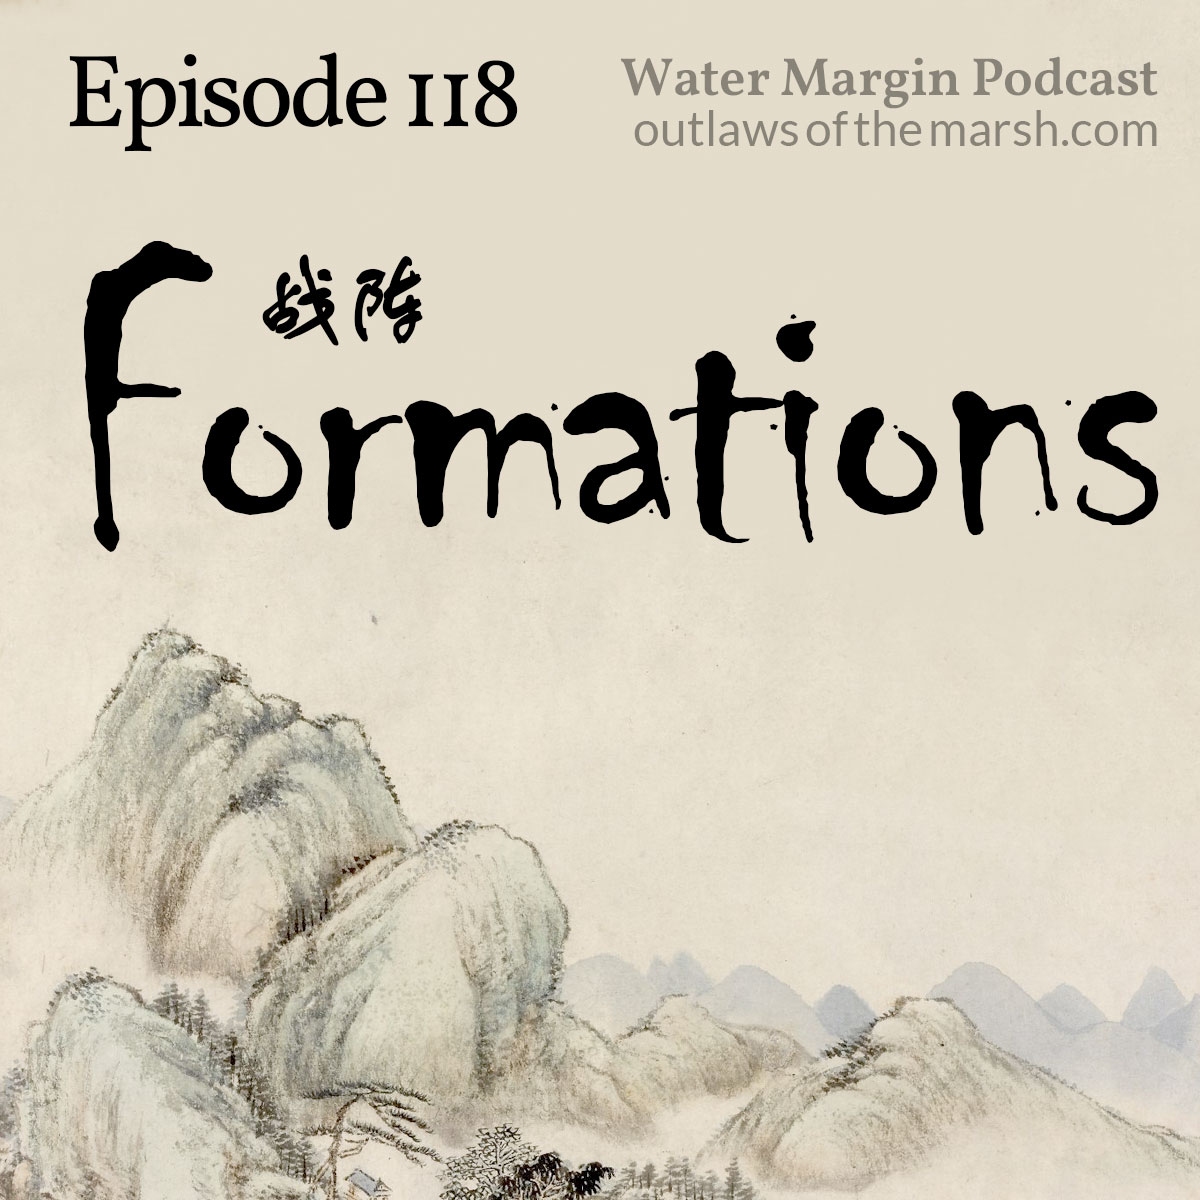 Water Margin Podcast: Episode 118